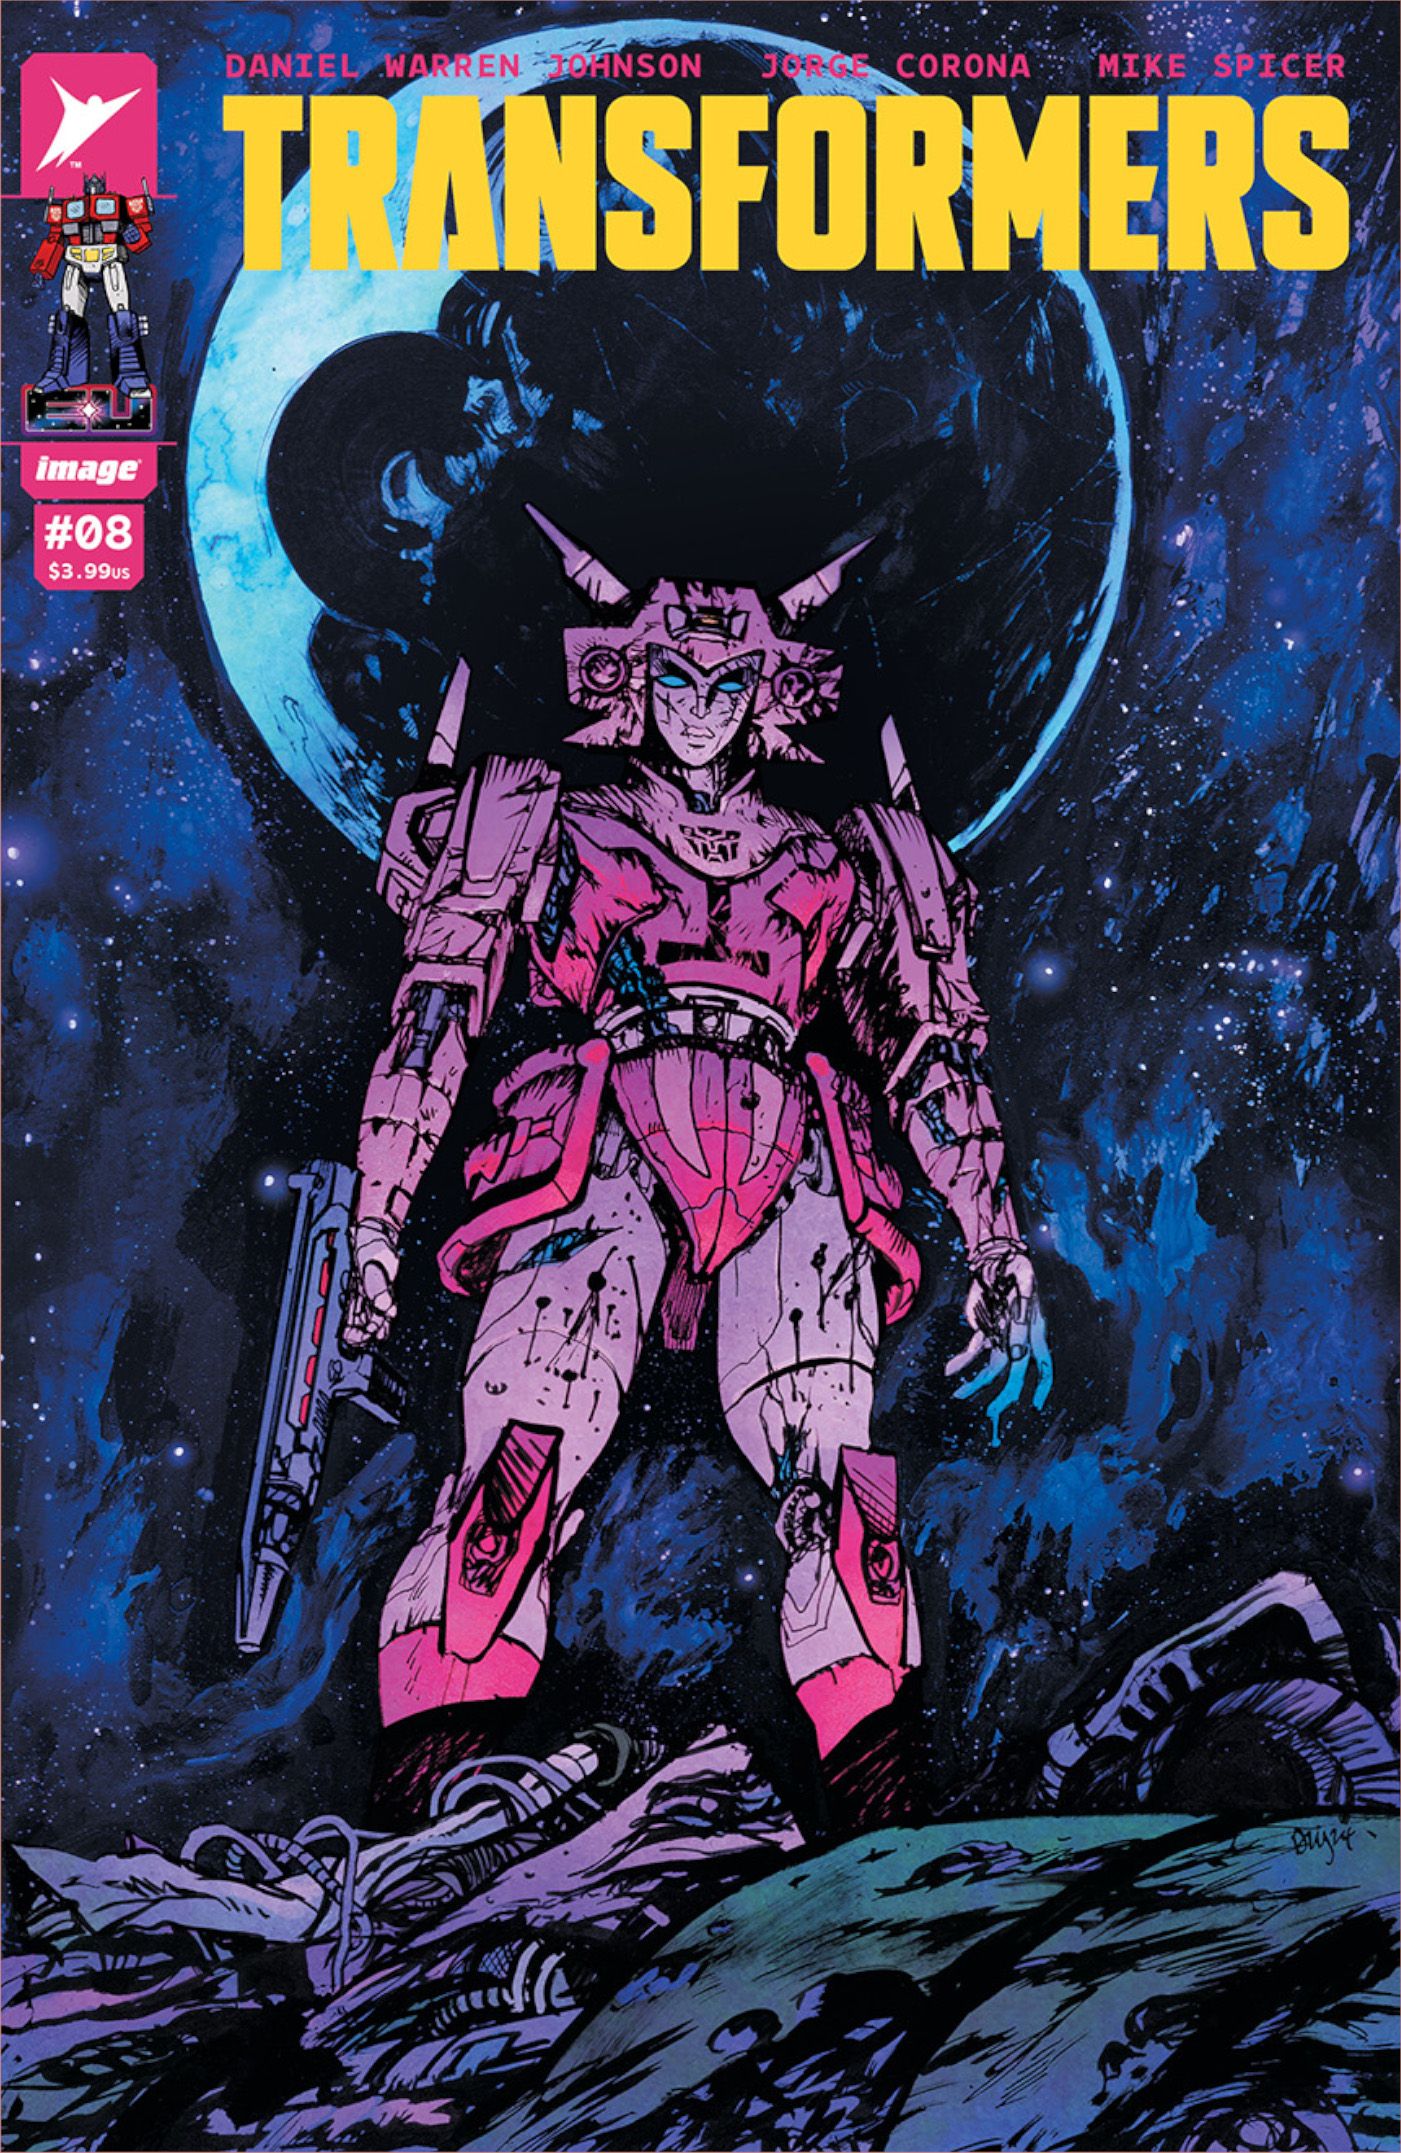 Transformers #8 Cover A by Daniel Warren Johnson